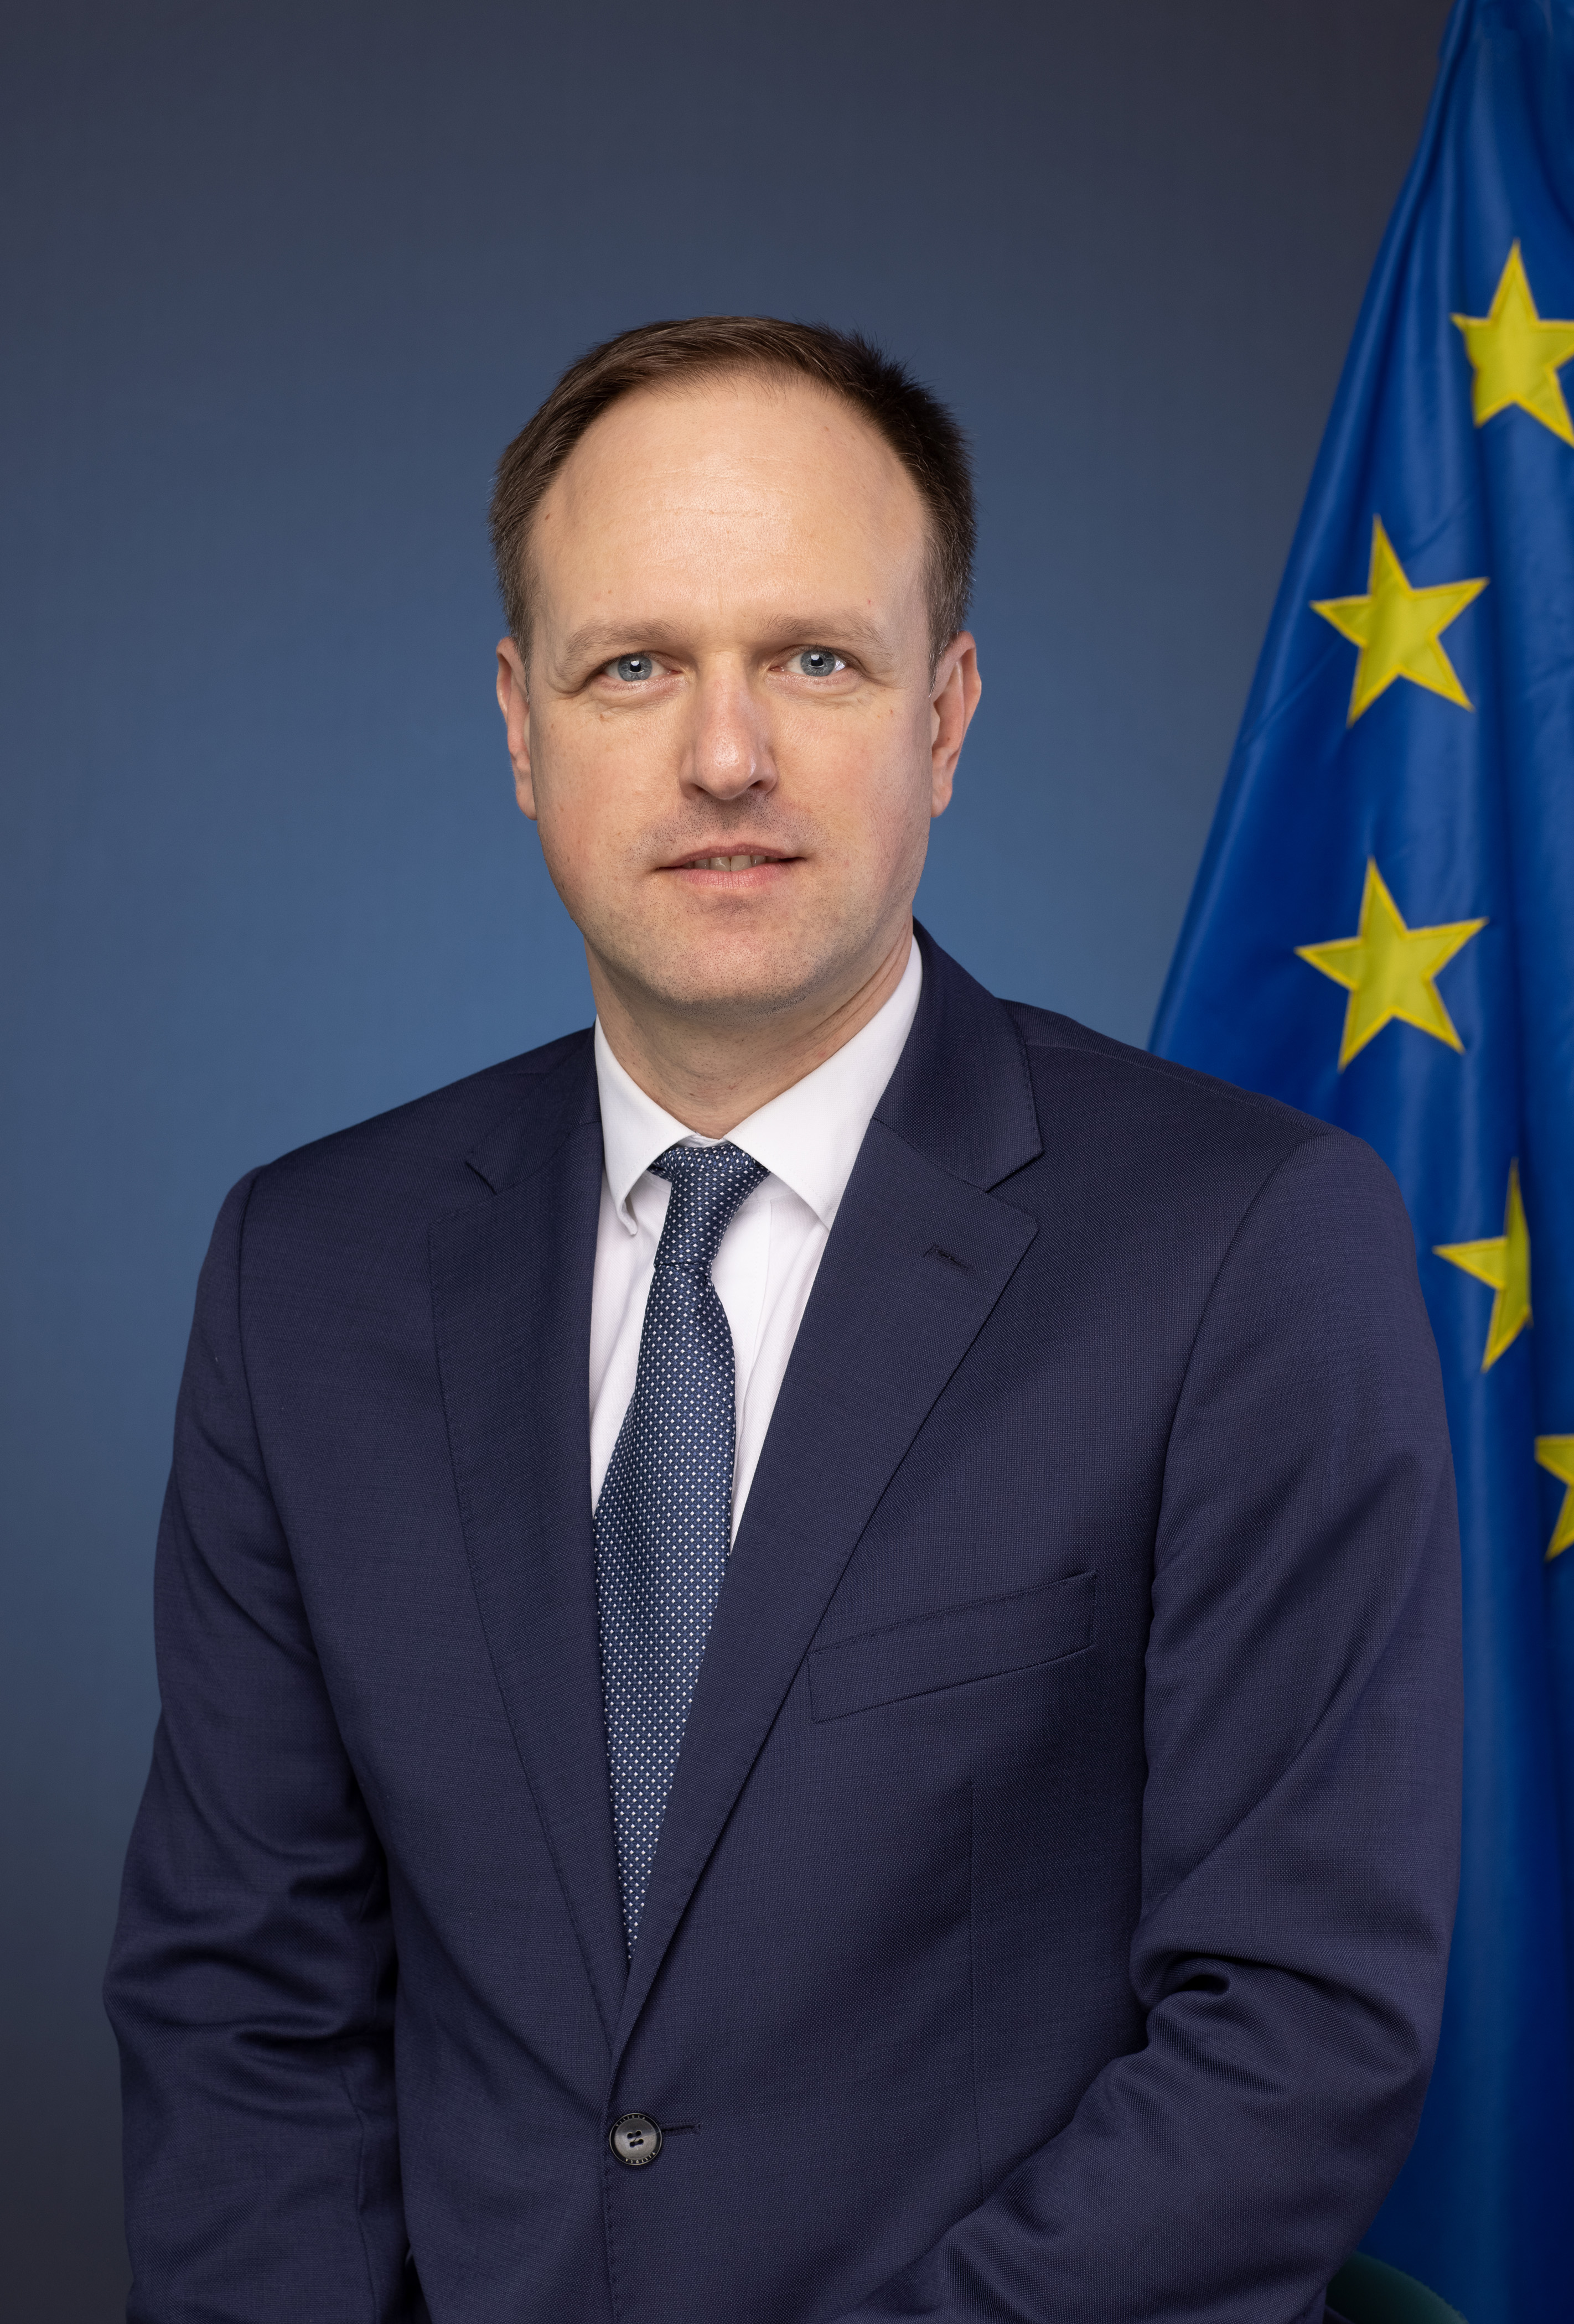 Photograph of European Prosecutor for Latvia Gatis Doniks